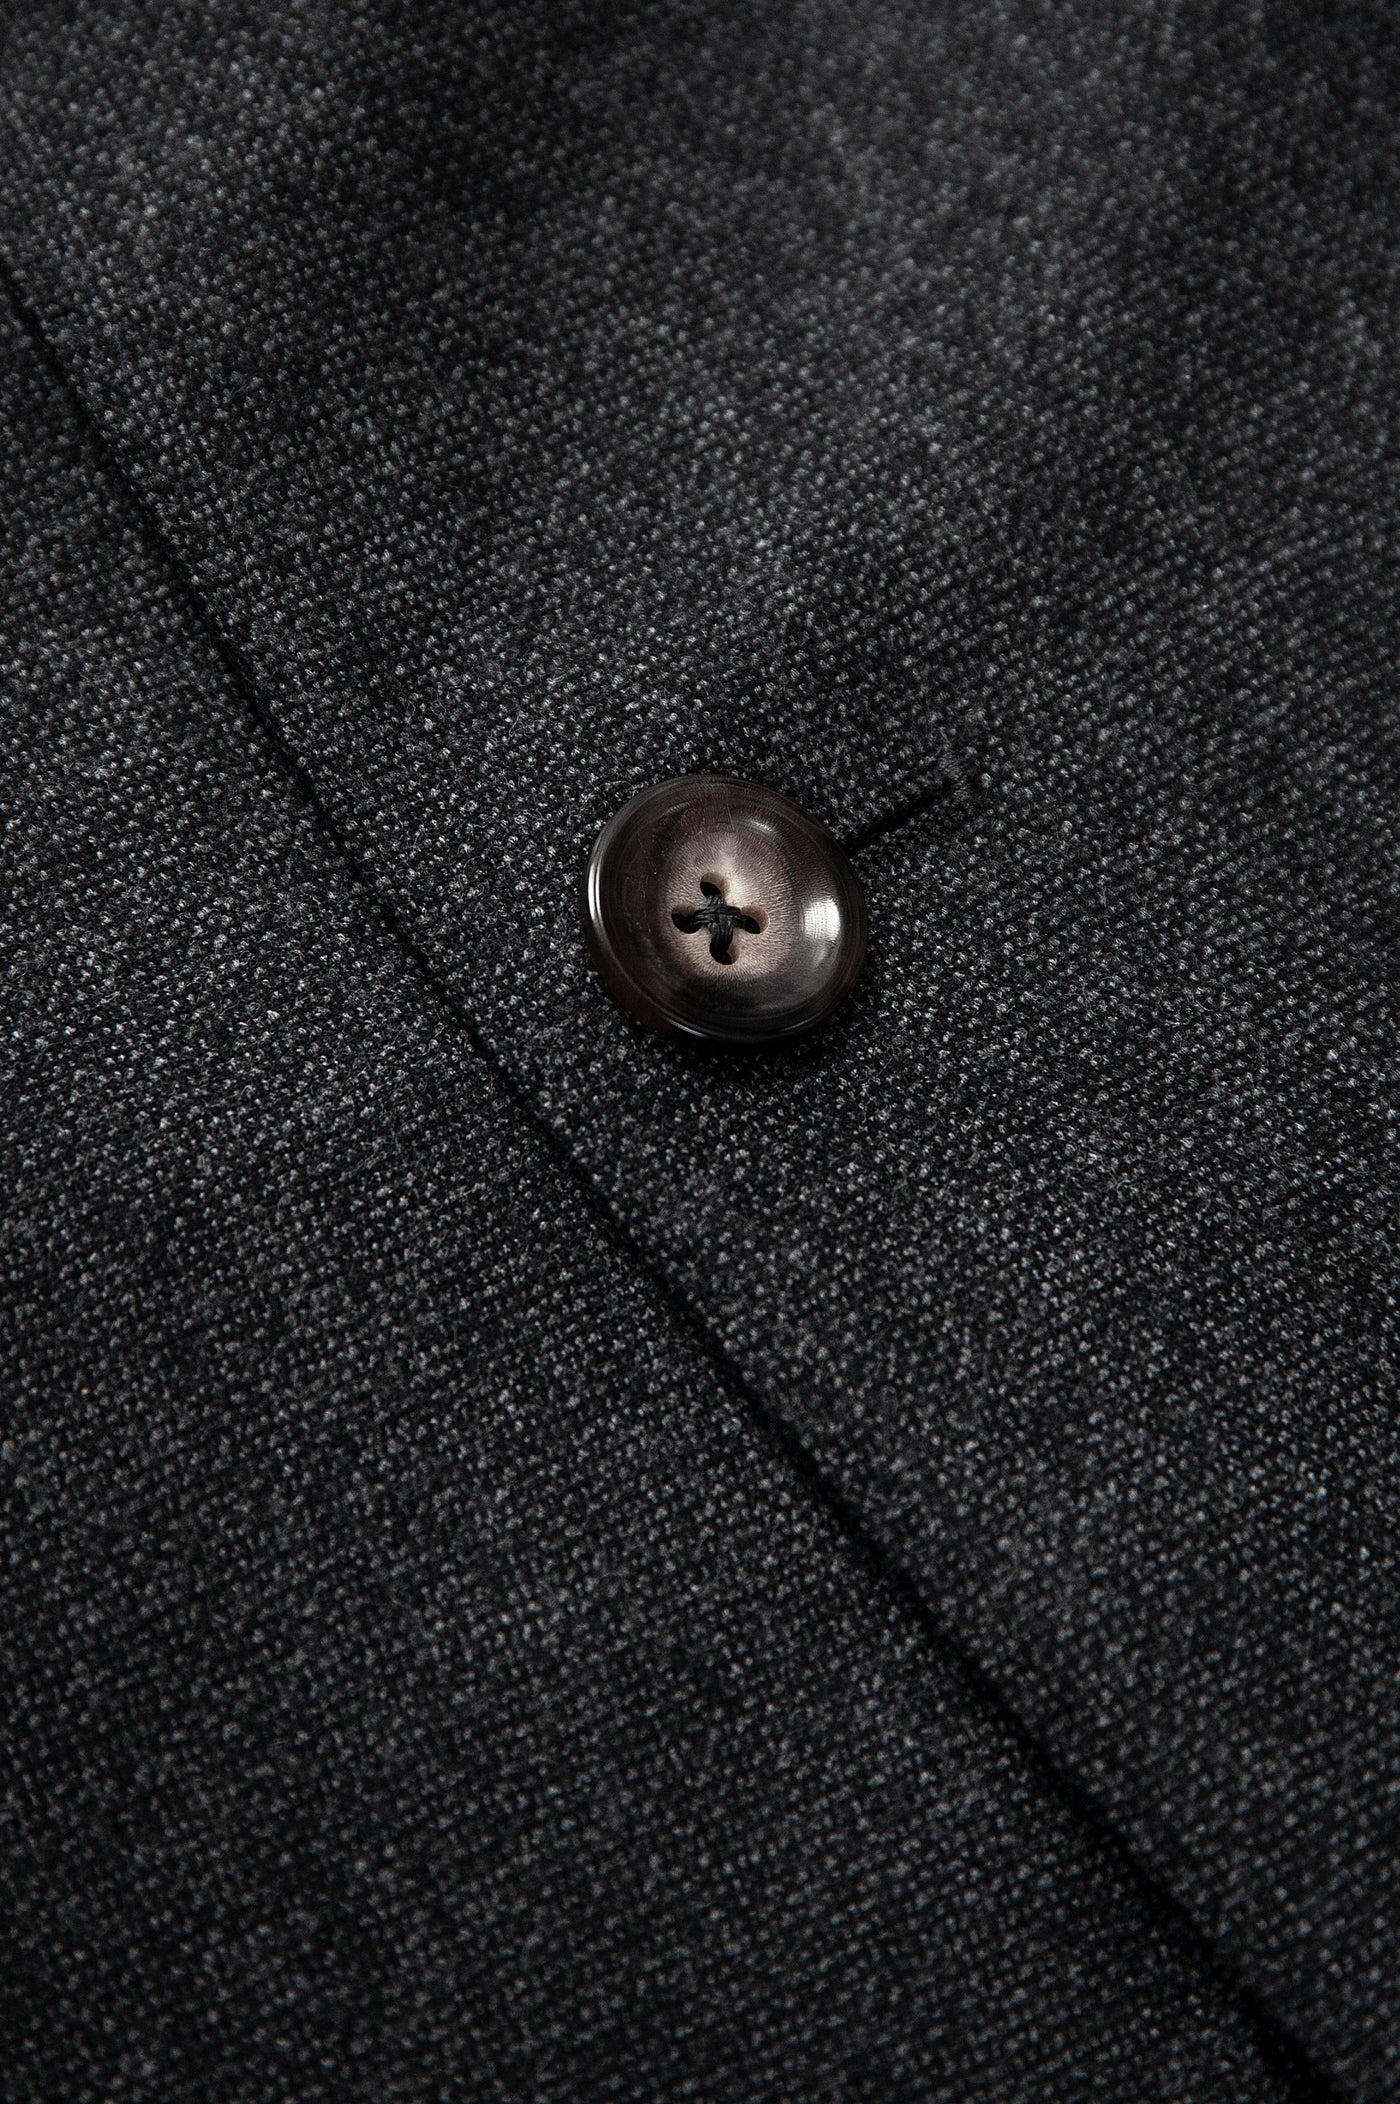 Suit Blazer and Pant in classic wool (dark grey melange)